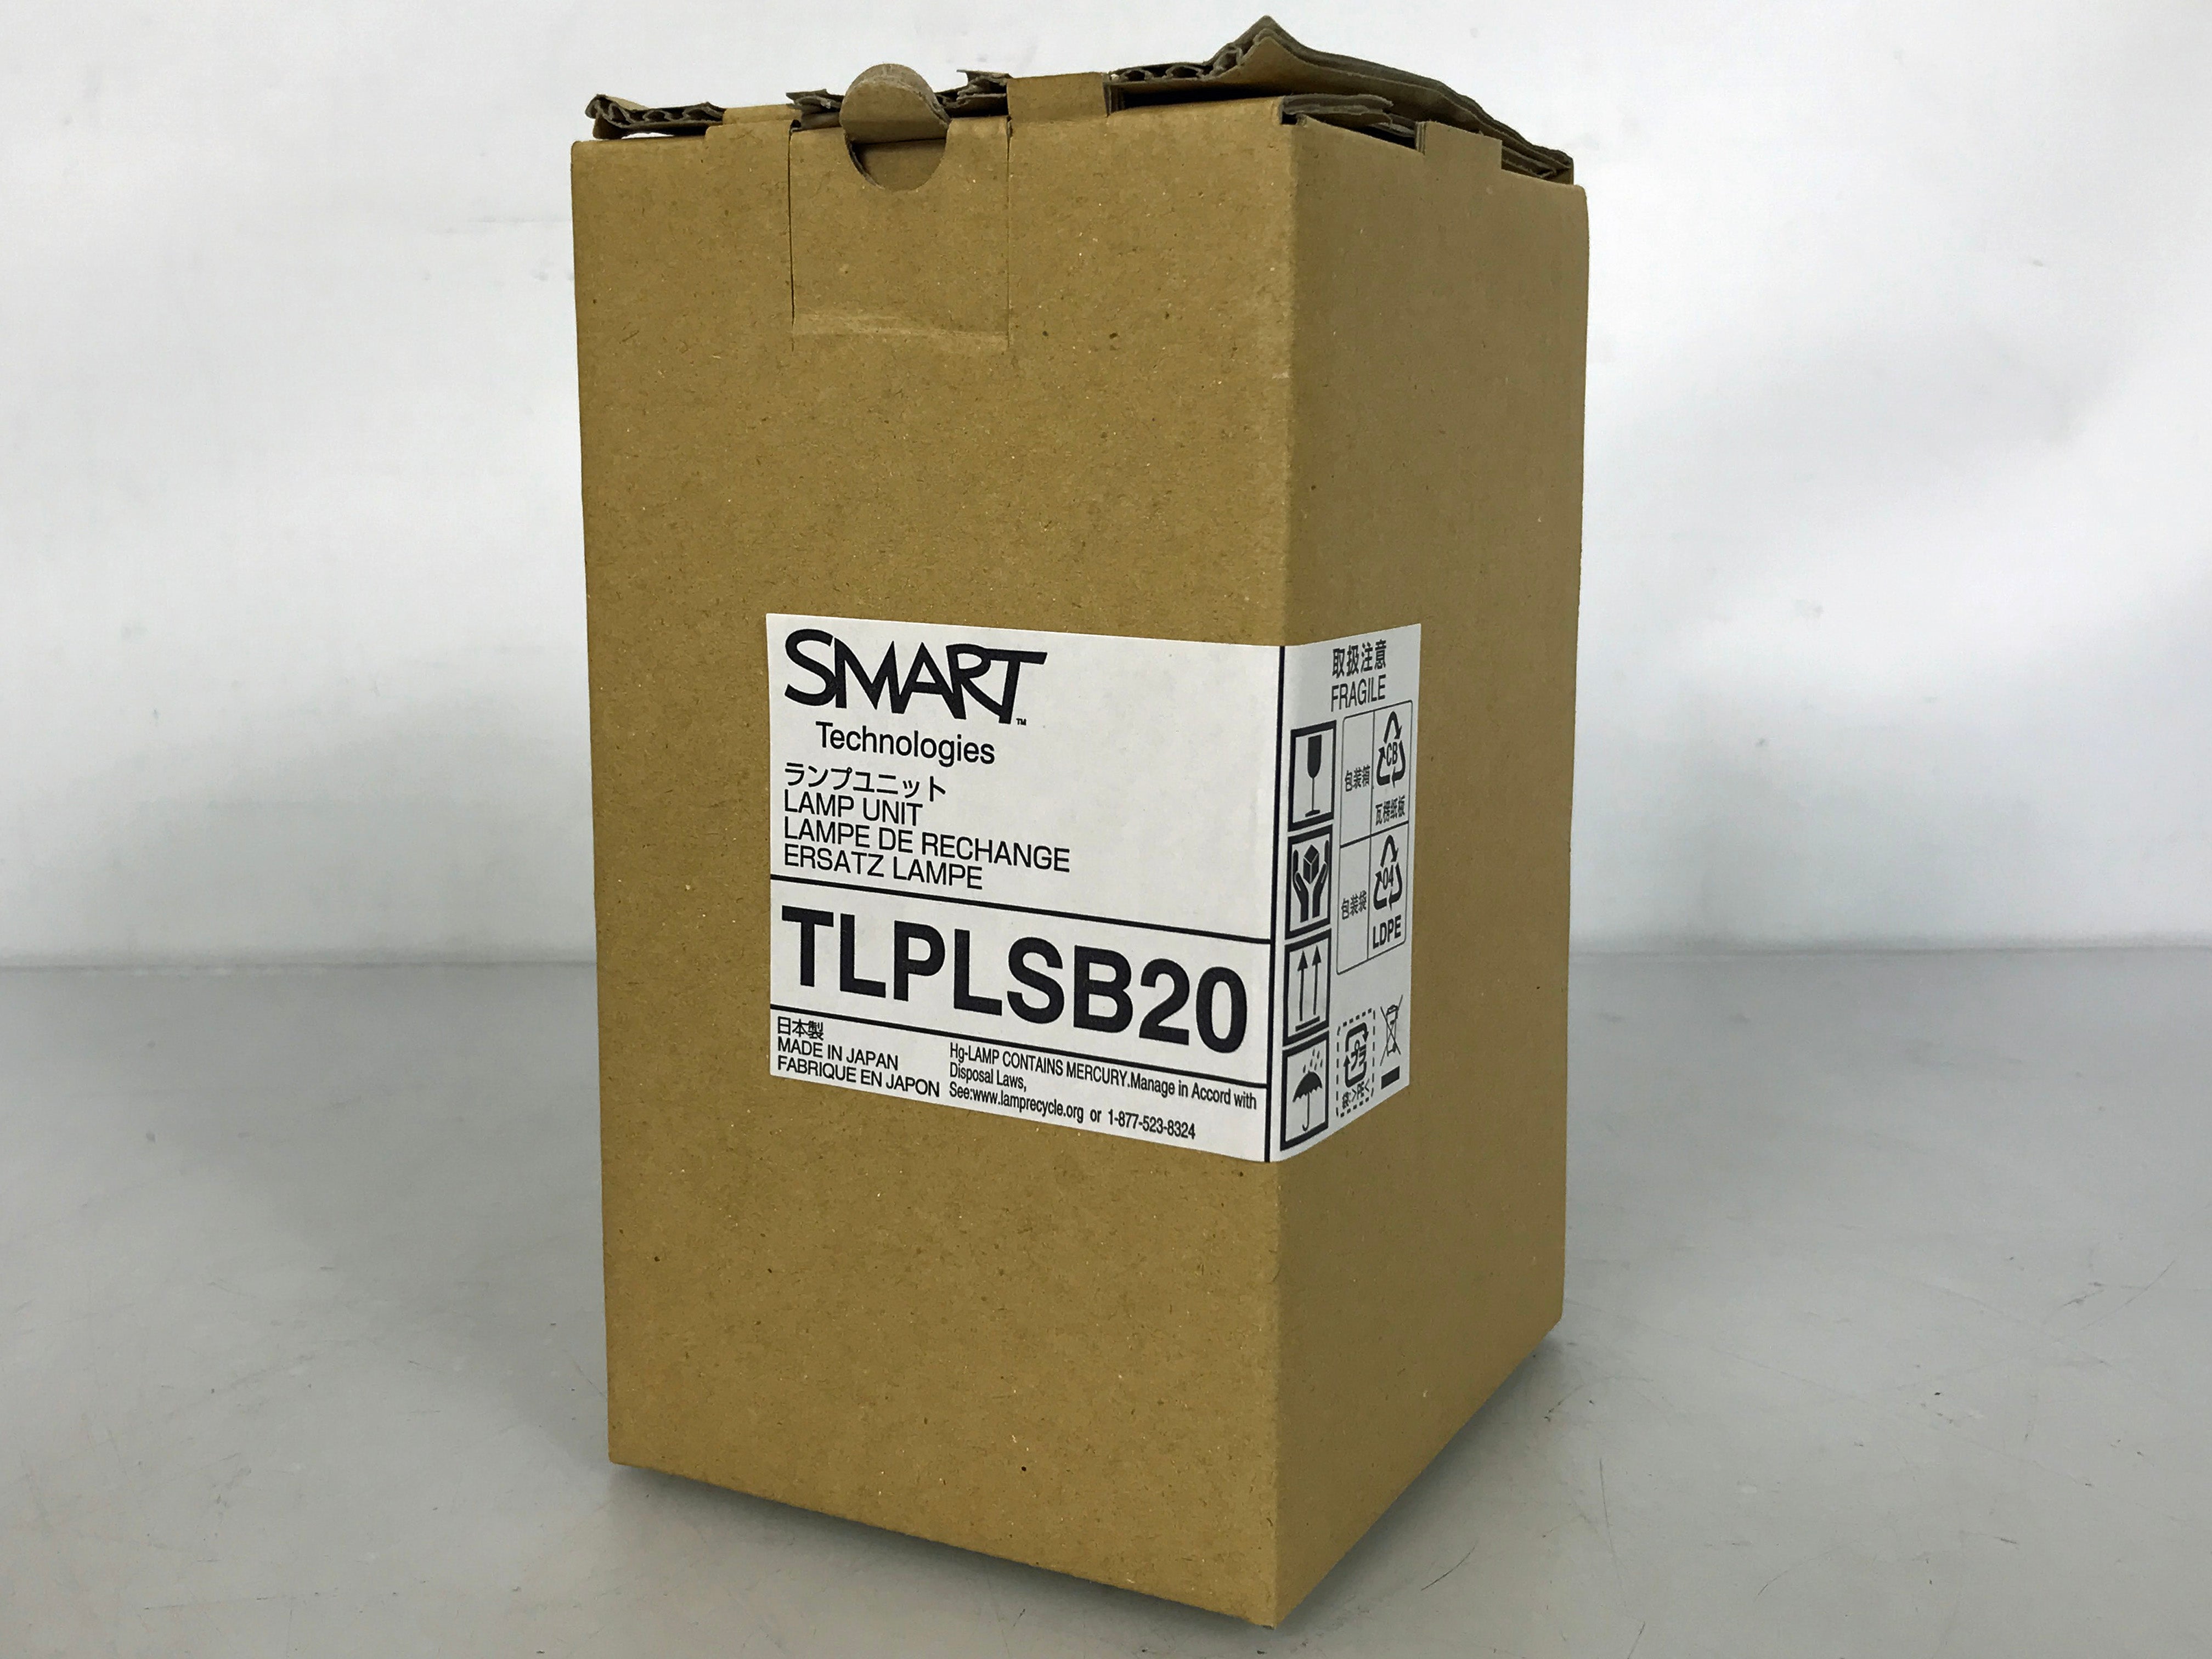 Smart Technologies TLPLSB20 Projector Lamp Unit